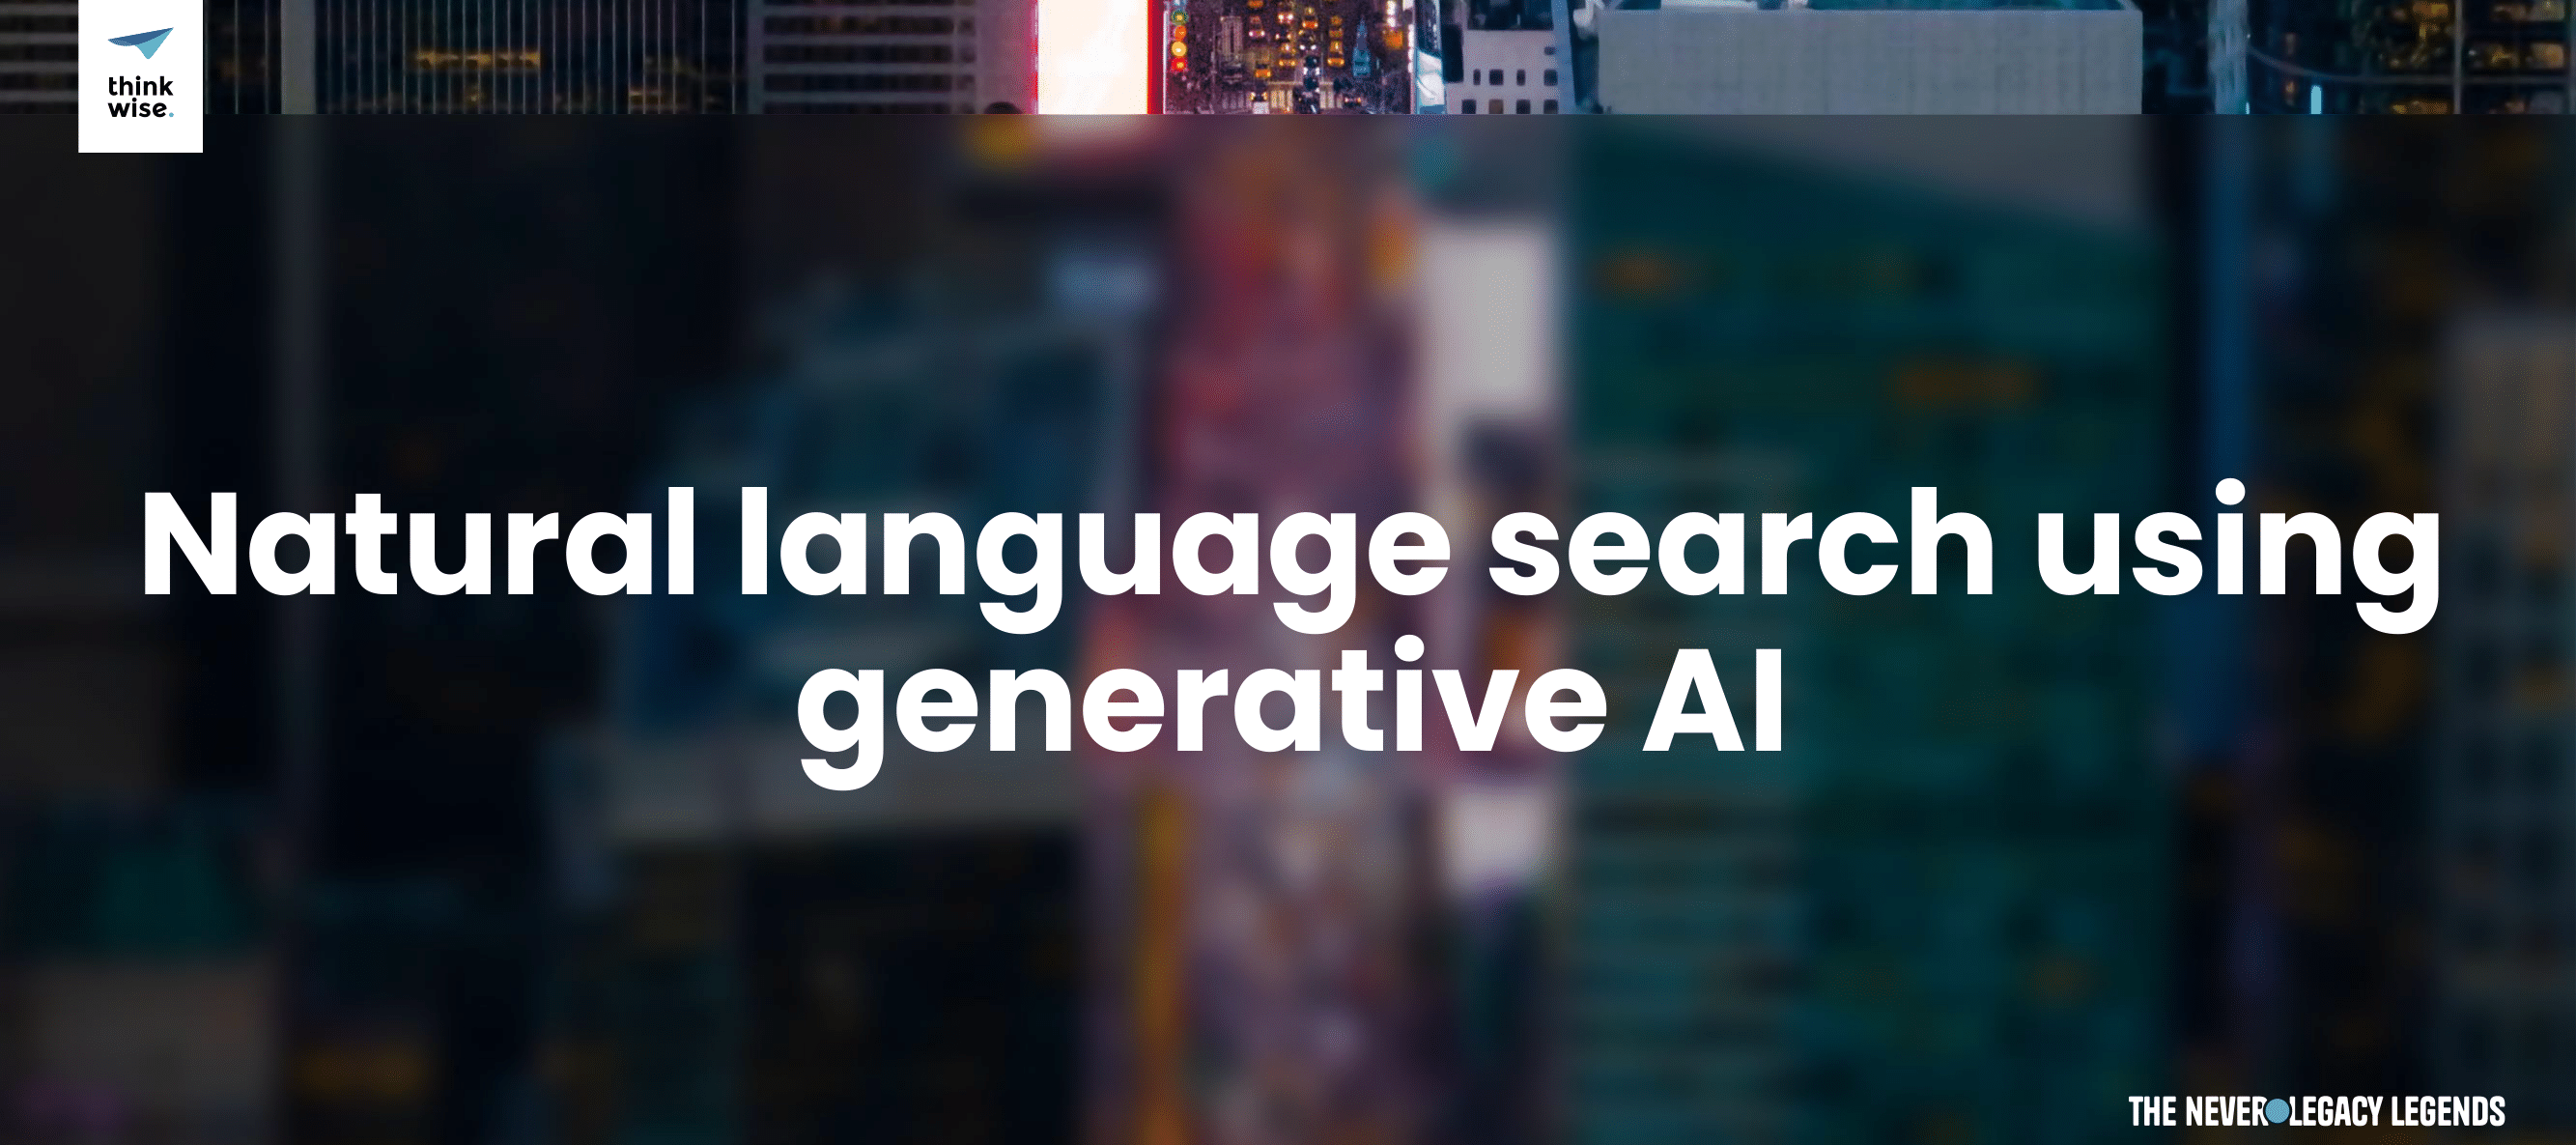 Natural language search using generative AI